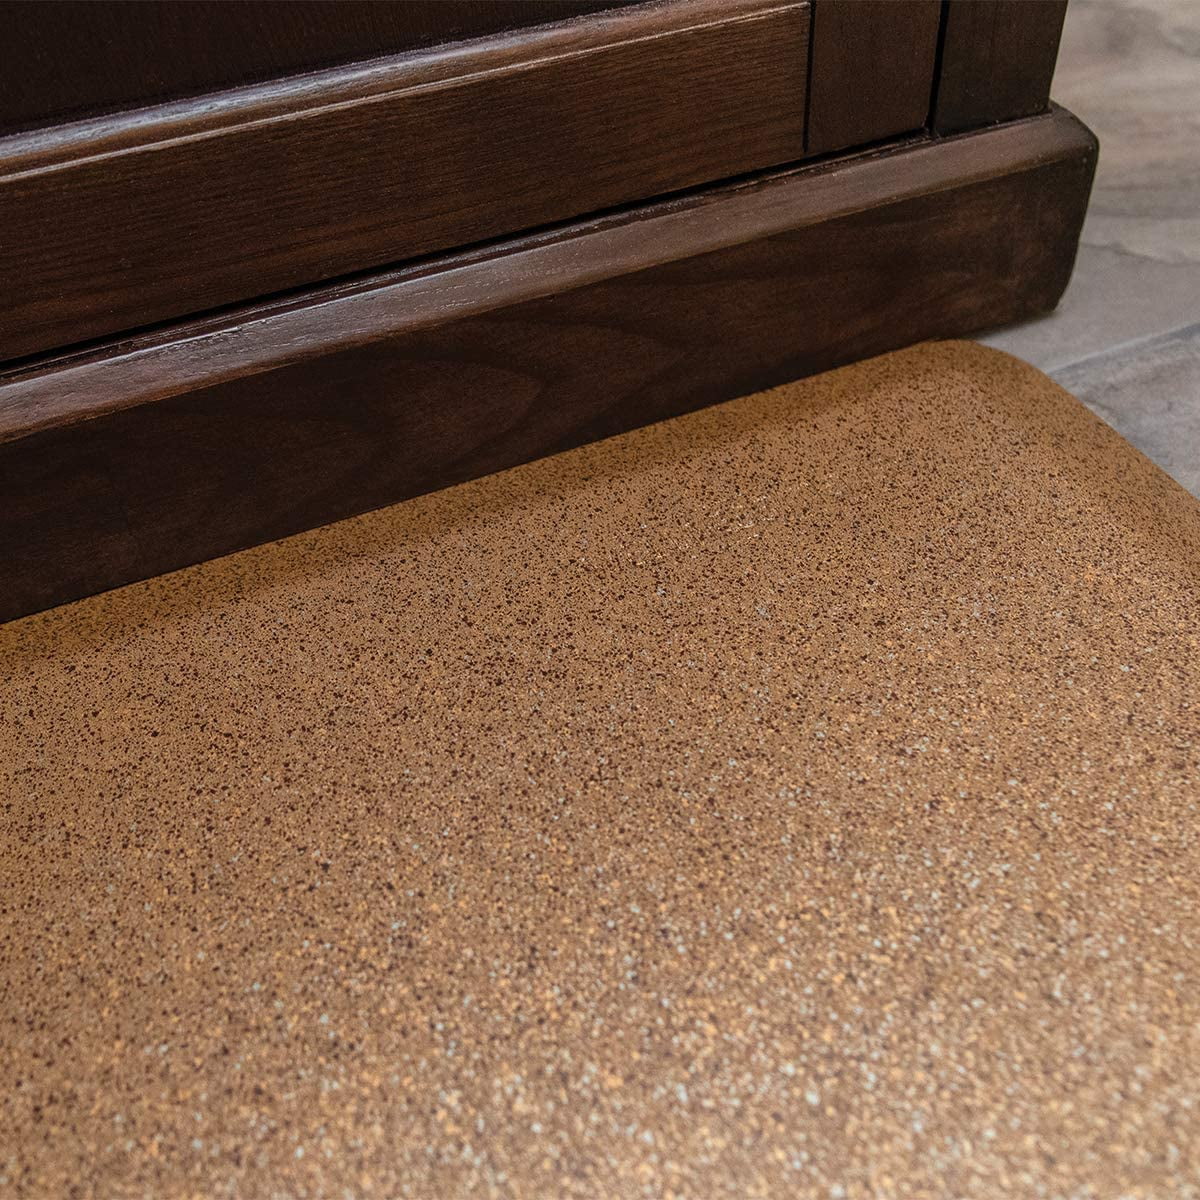 WellnessMats Original Collection Anti-Fatigue Floor Mat, Gray, 36 in. x 24  in. x ¾ in. Polyurethane – Ergonomic Support Pad for Home, Kitchen, Garage